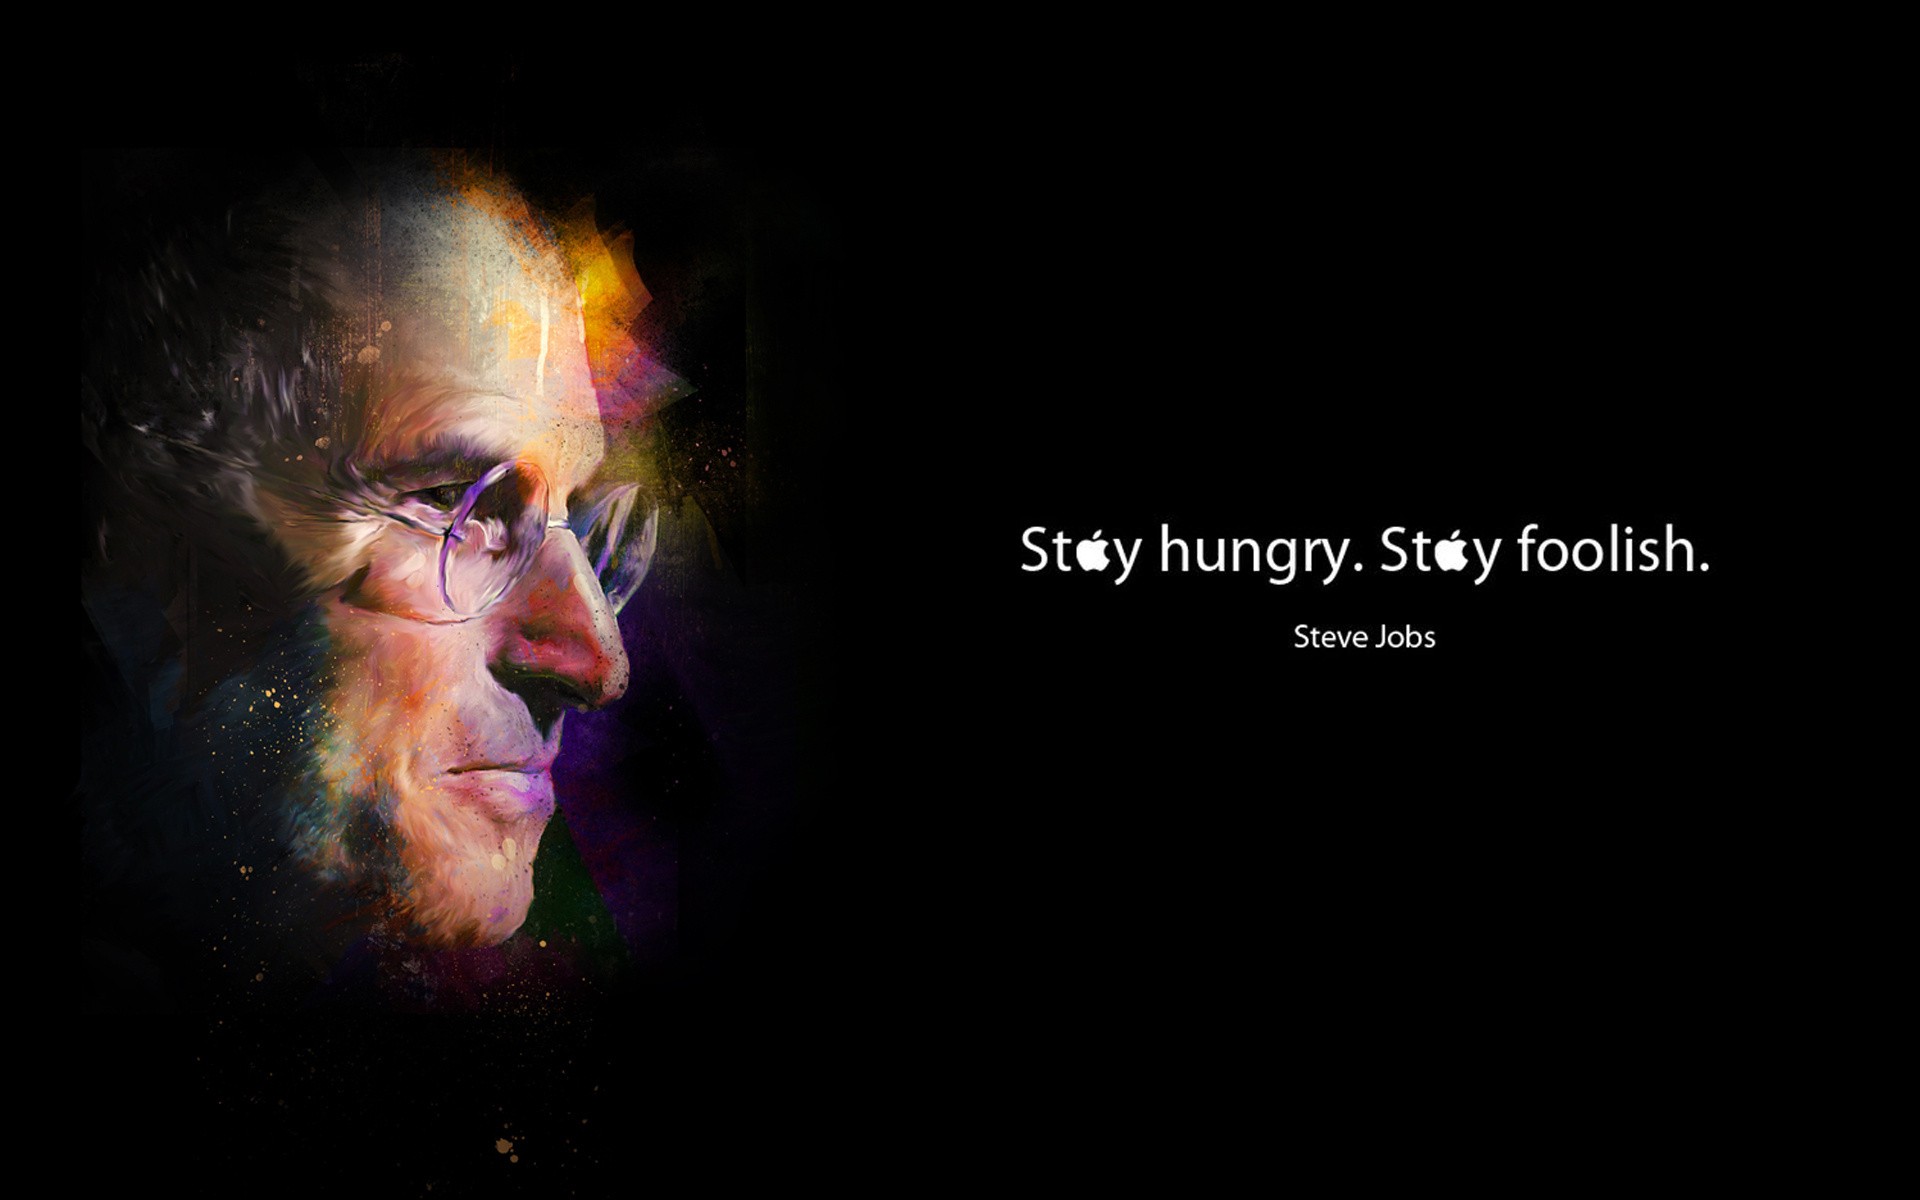 Celebrity Steve Jobs Hungry Foolish Wallpaper Background